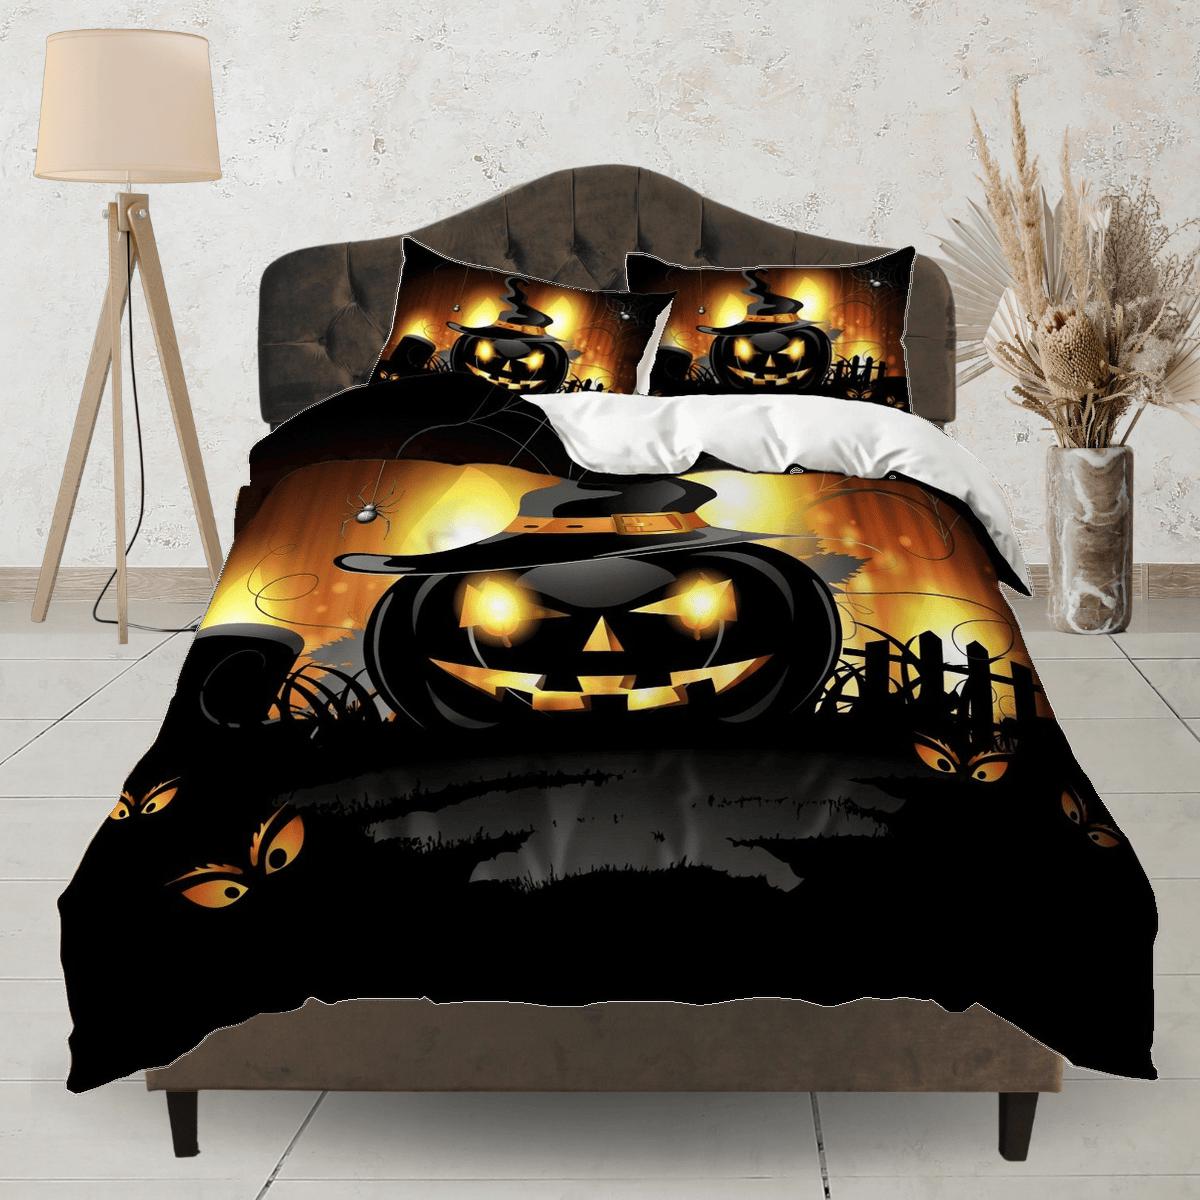 daintyduvet Black pumpkin halloween bedding & pillowcase, gothic duvet cover, dorm bedding, goth decor toddler bedding, halloween gift